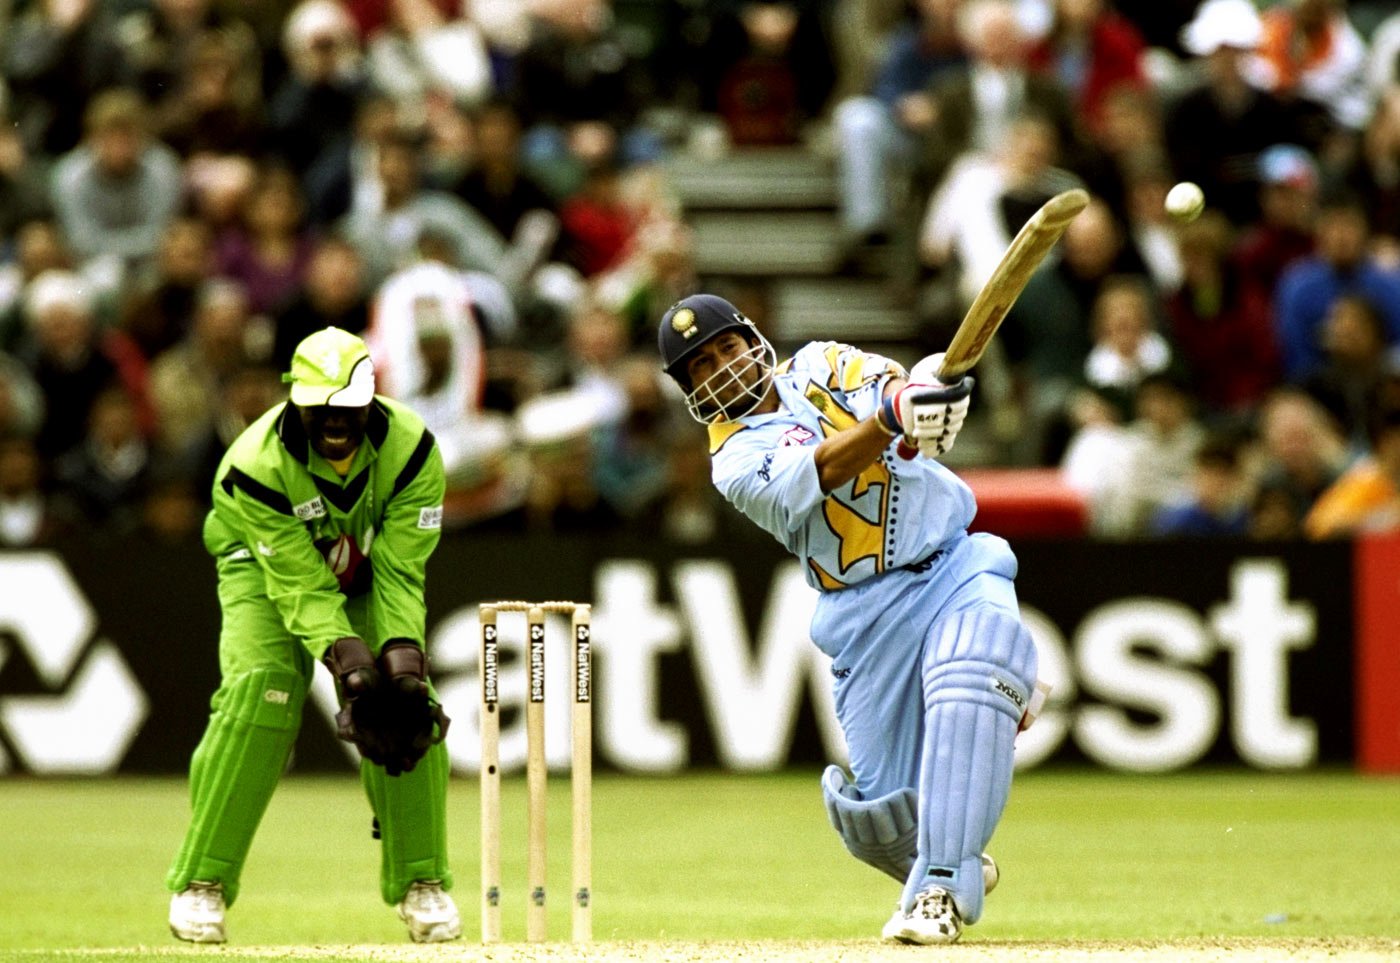 Sachin Tendulkar during the innings against Kenya during the 1999 World Cup. (Credits: Twitter)